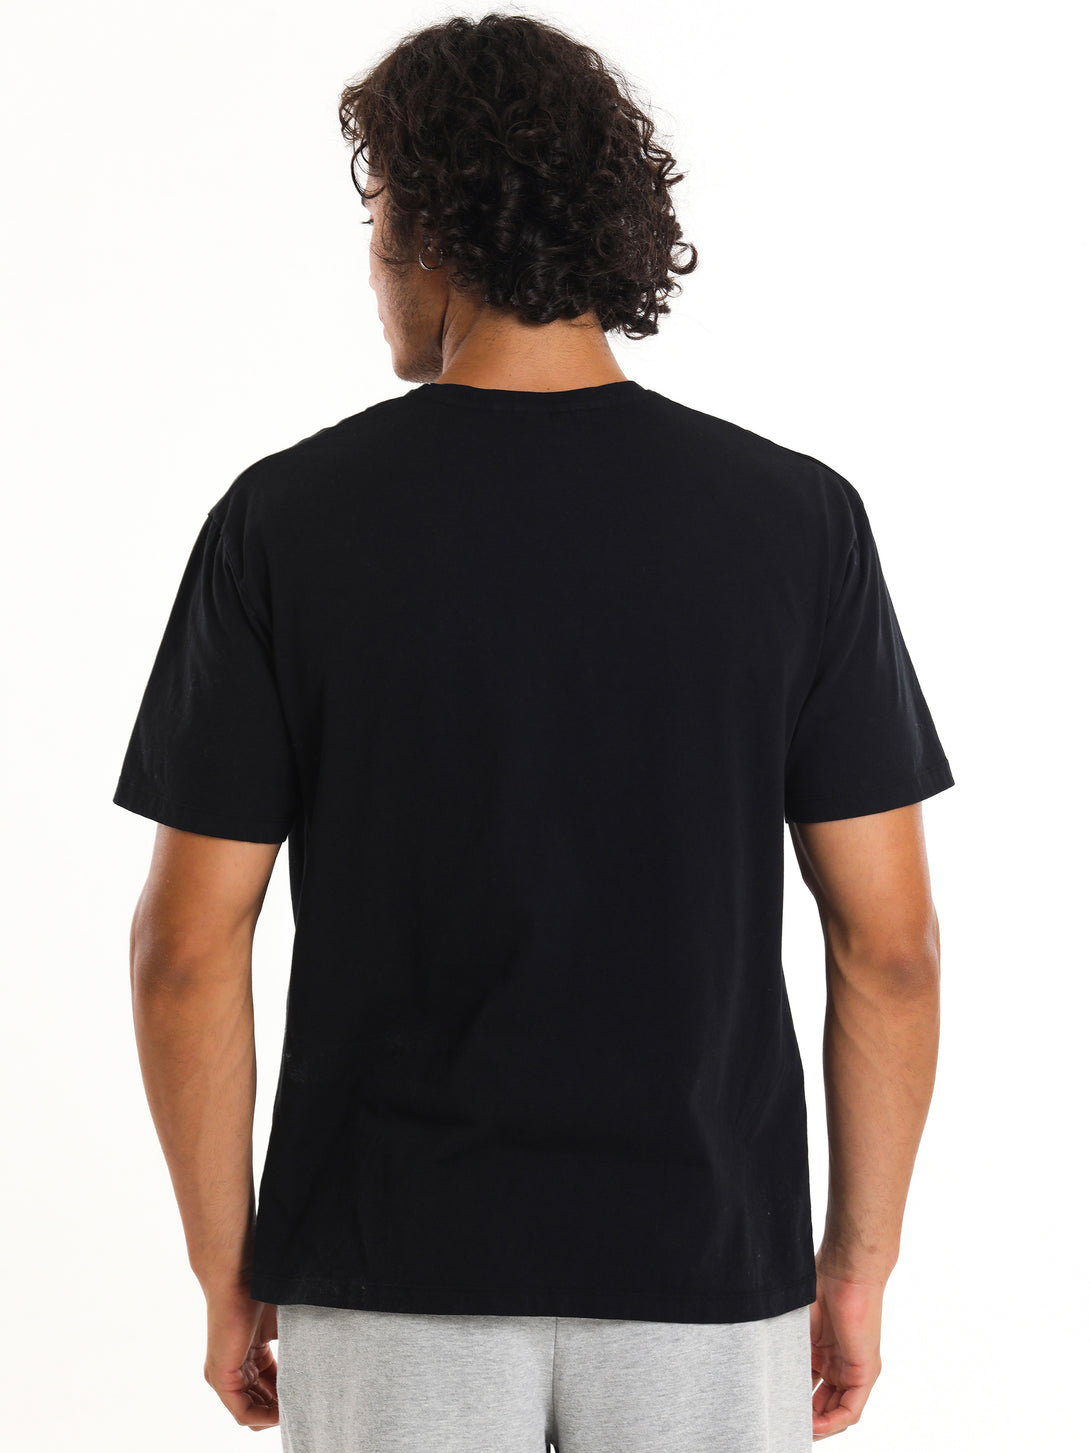 A Man Wearing Black Color T-shirt